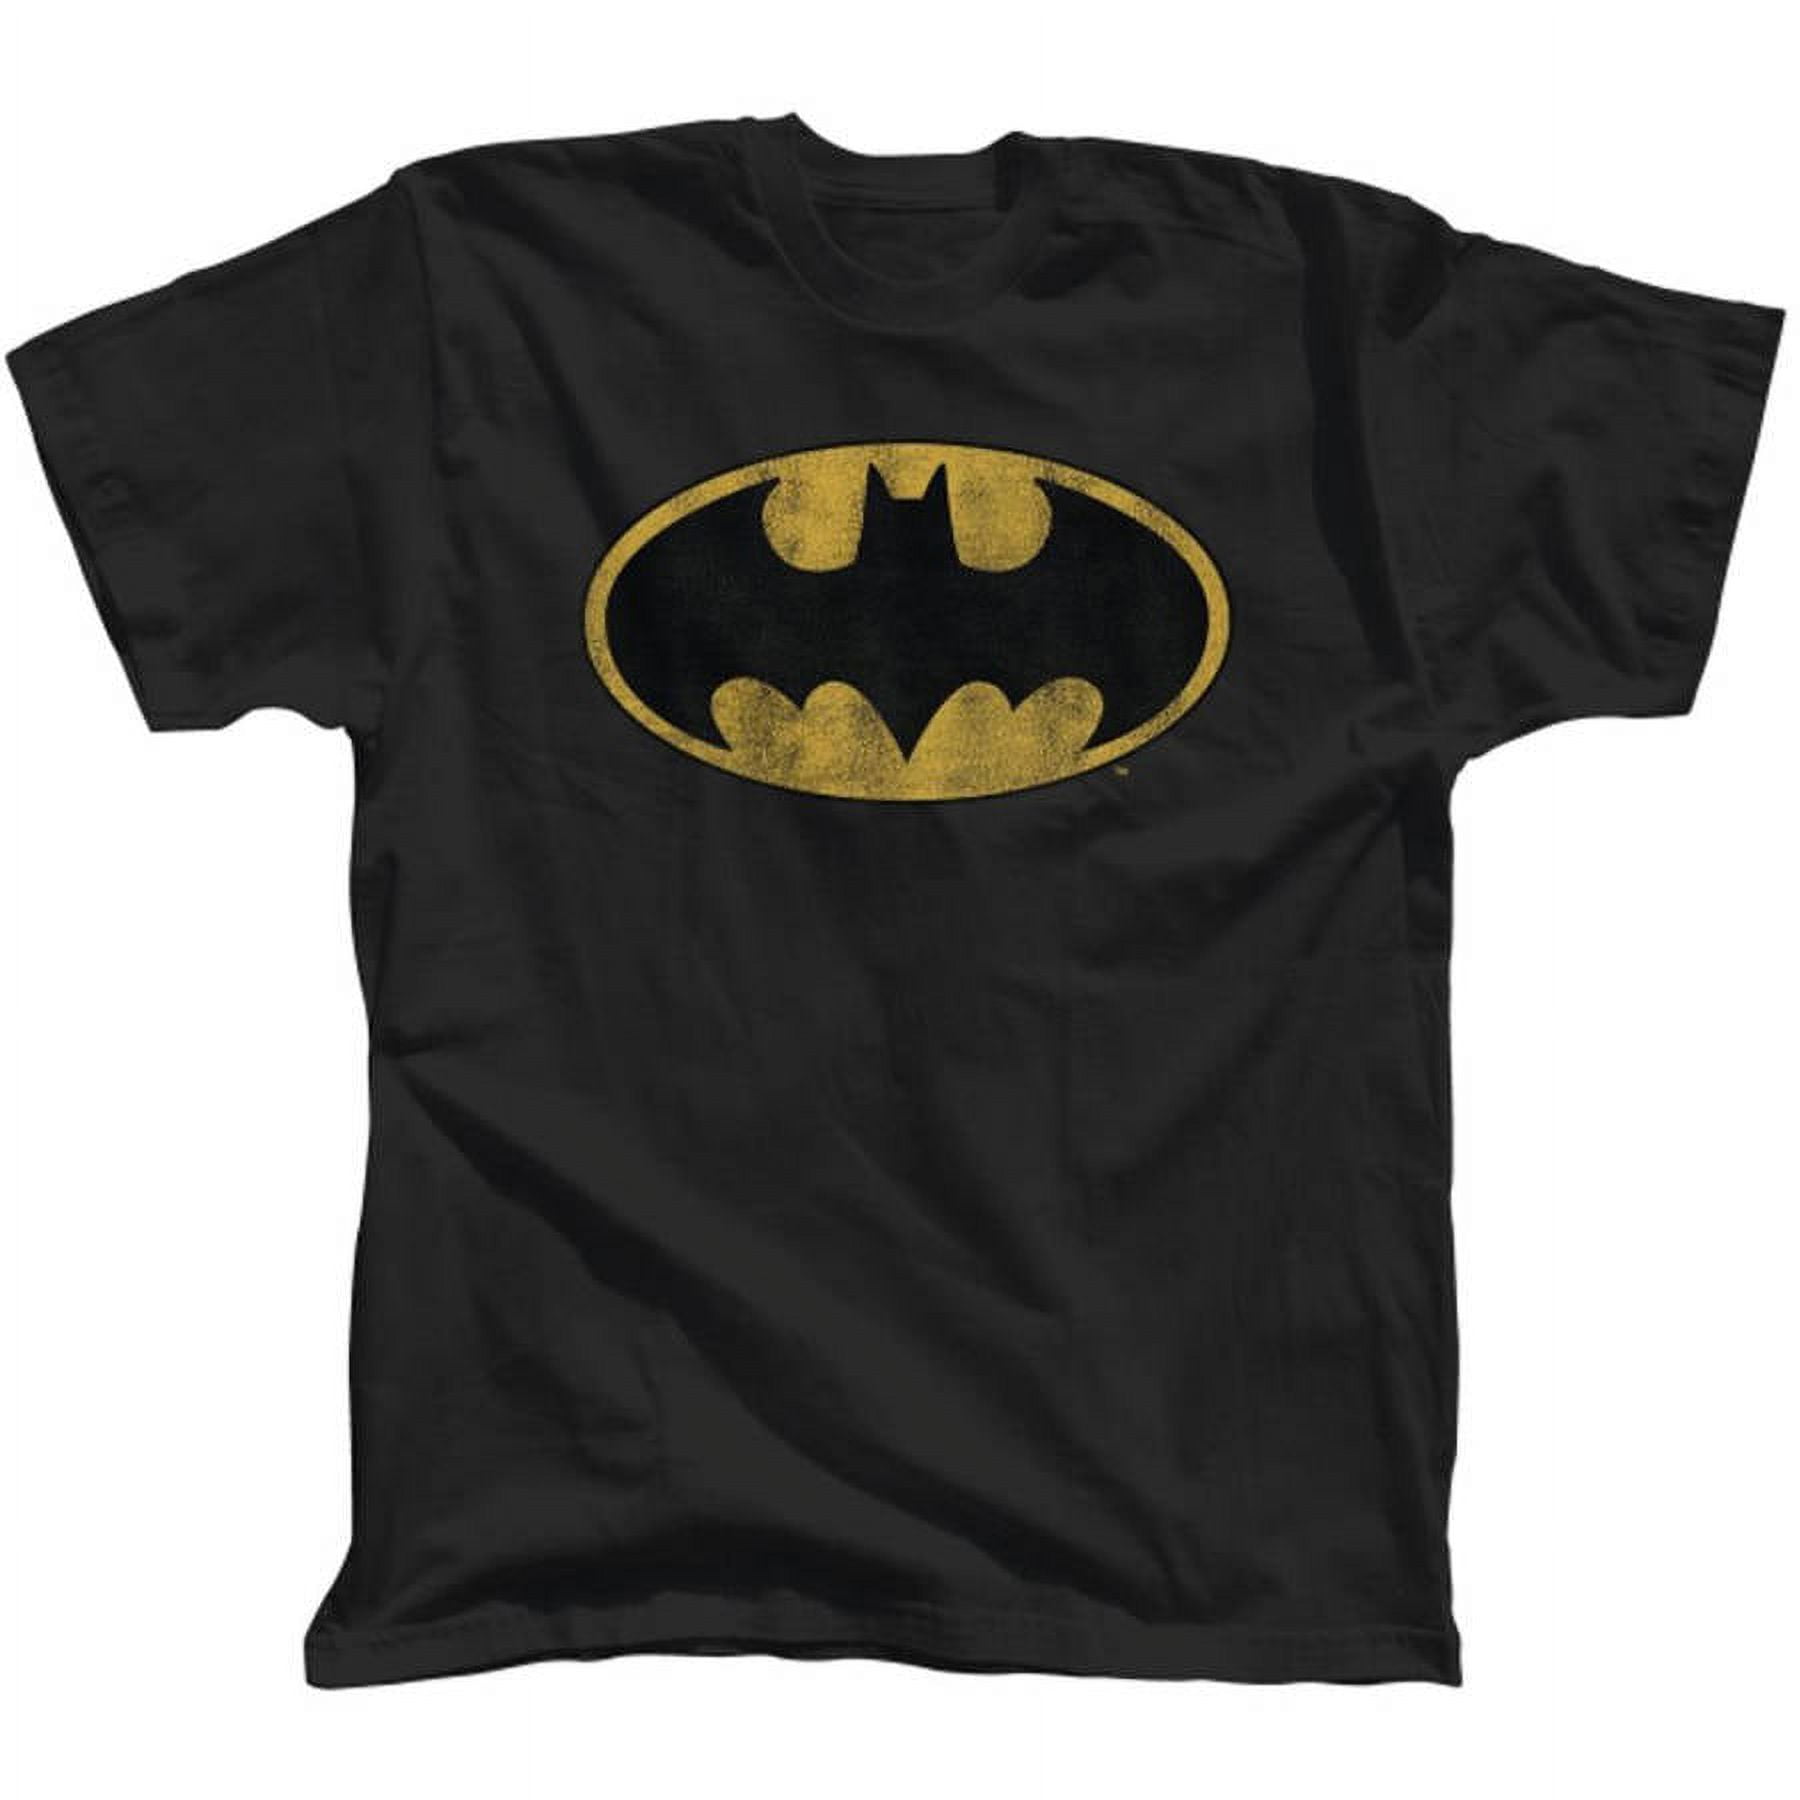 Batman distressed logo Men's tee shirt - Walmart.com